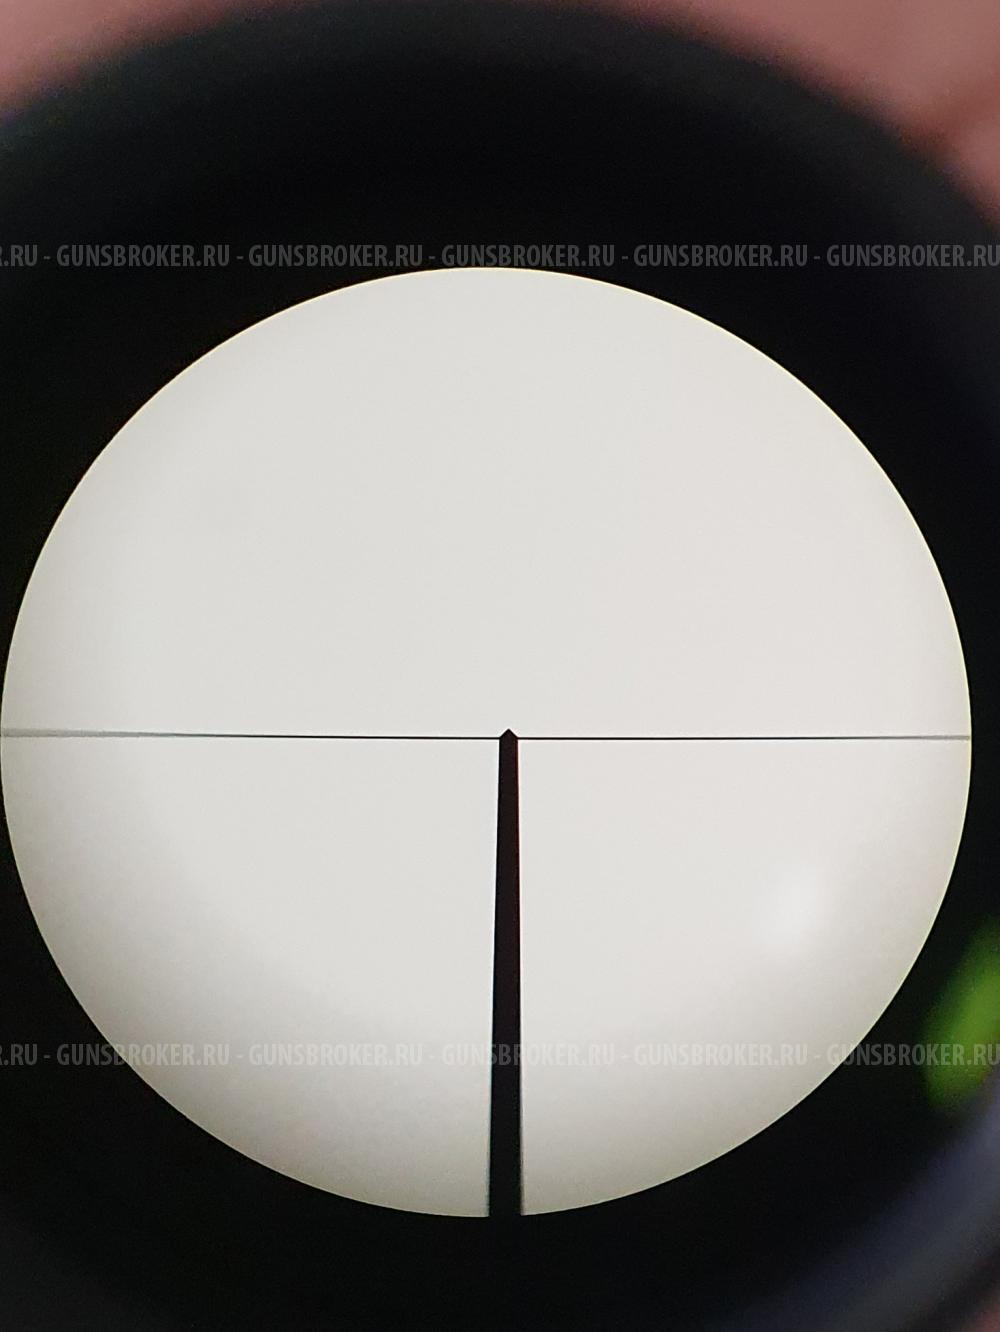 Оптика Kahles C 1,5-6х42L,ret.21 без подсветки (Австрия) Быстросъёмное основание МАС